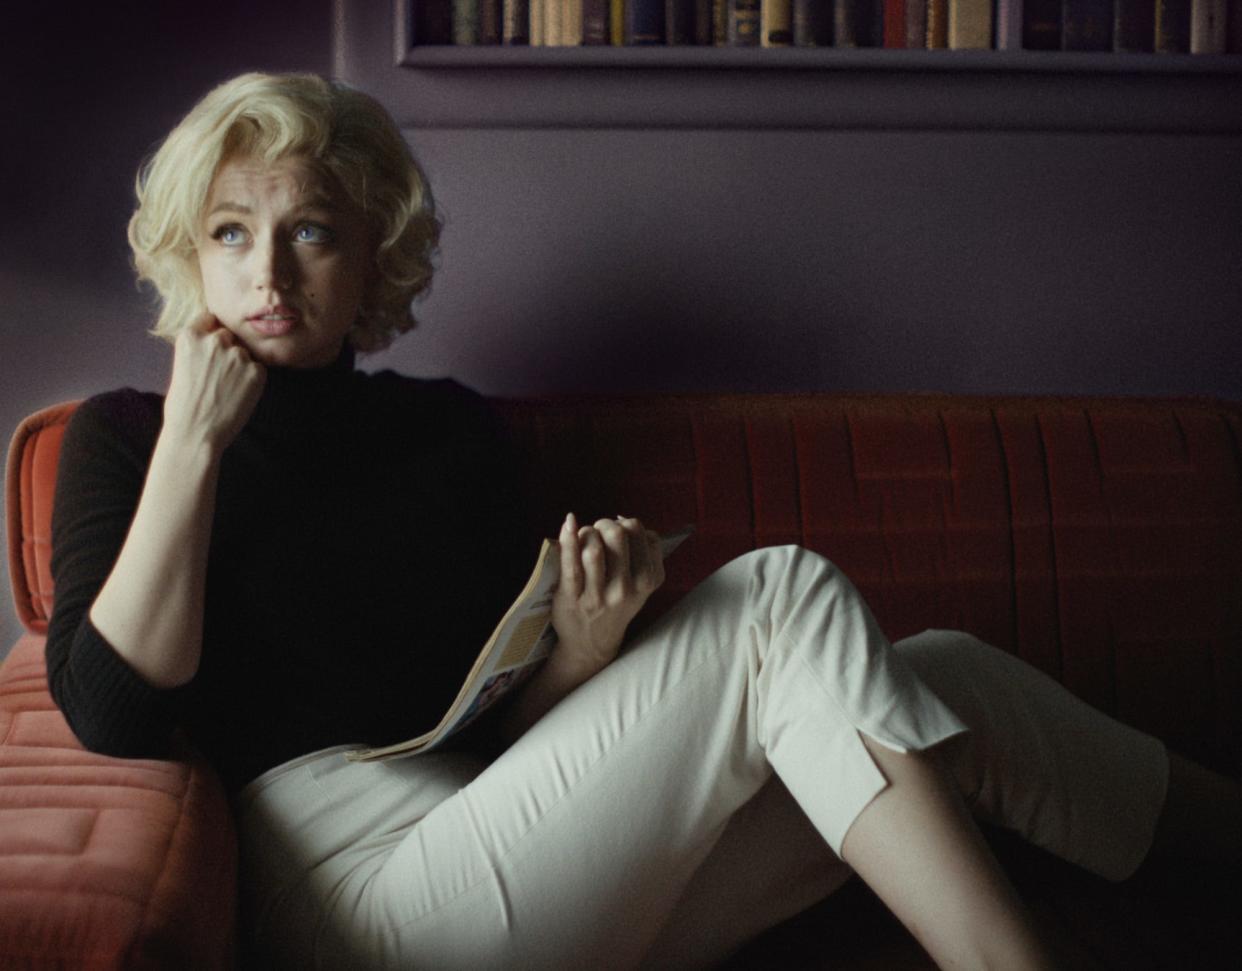 Ana de Armas as Marilyn Monroe in Netflix's upcoming film "Blonde."